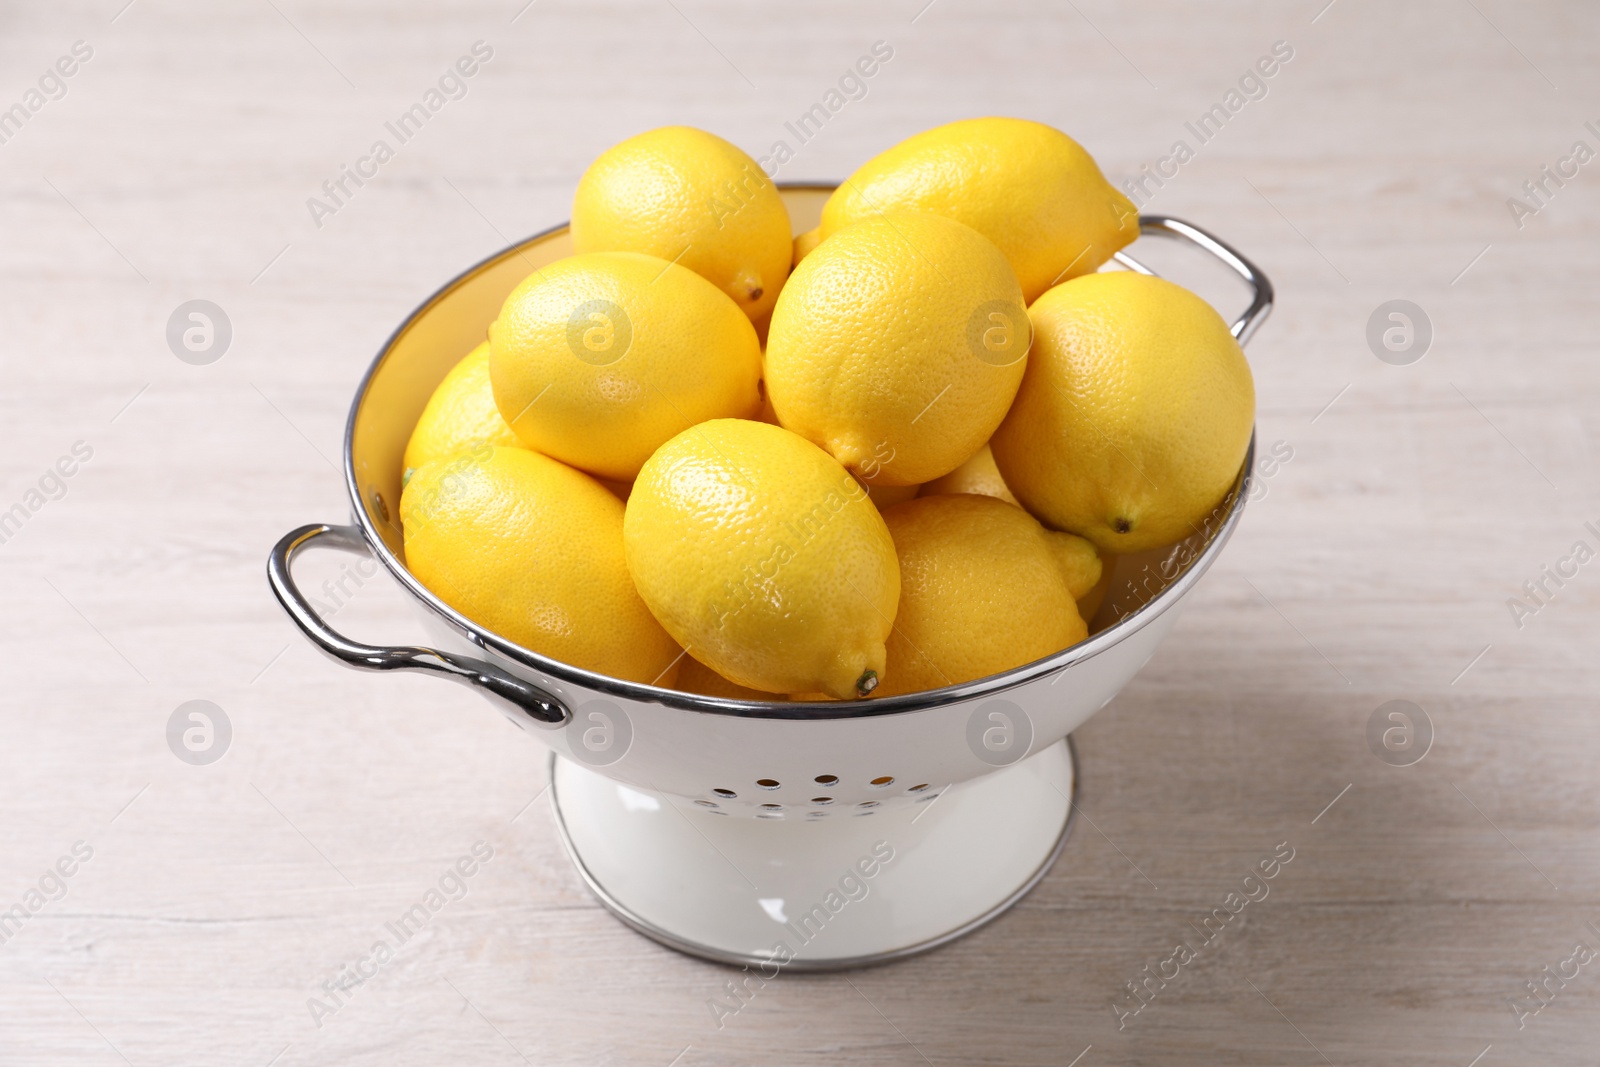 Photo of Many fresh ripe lemons on wooden table